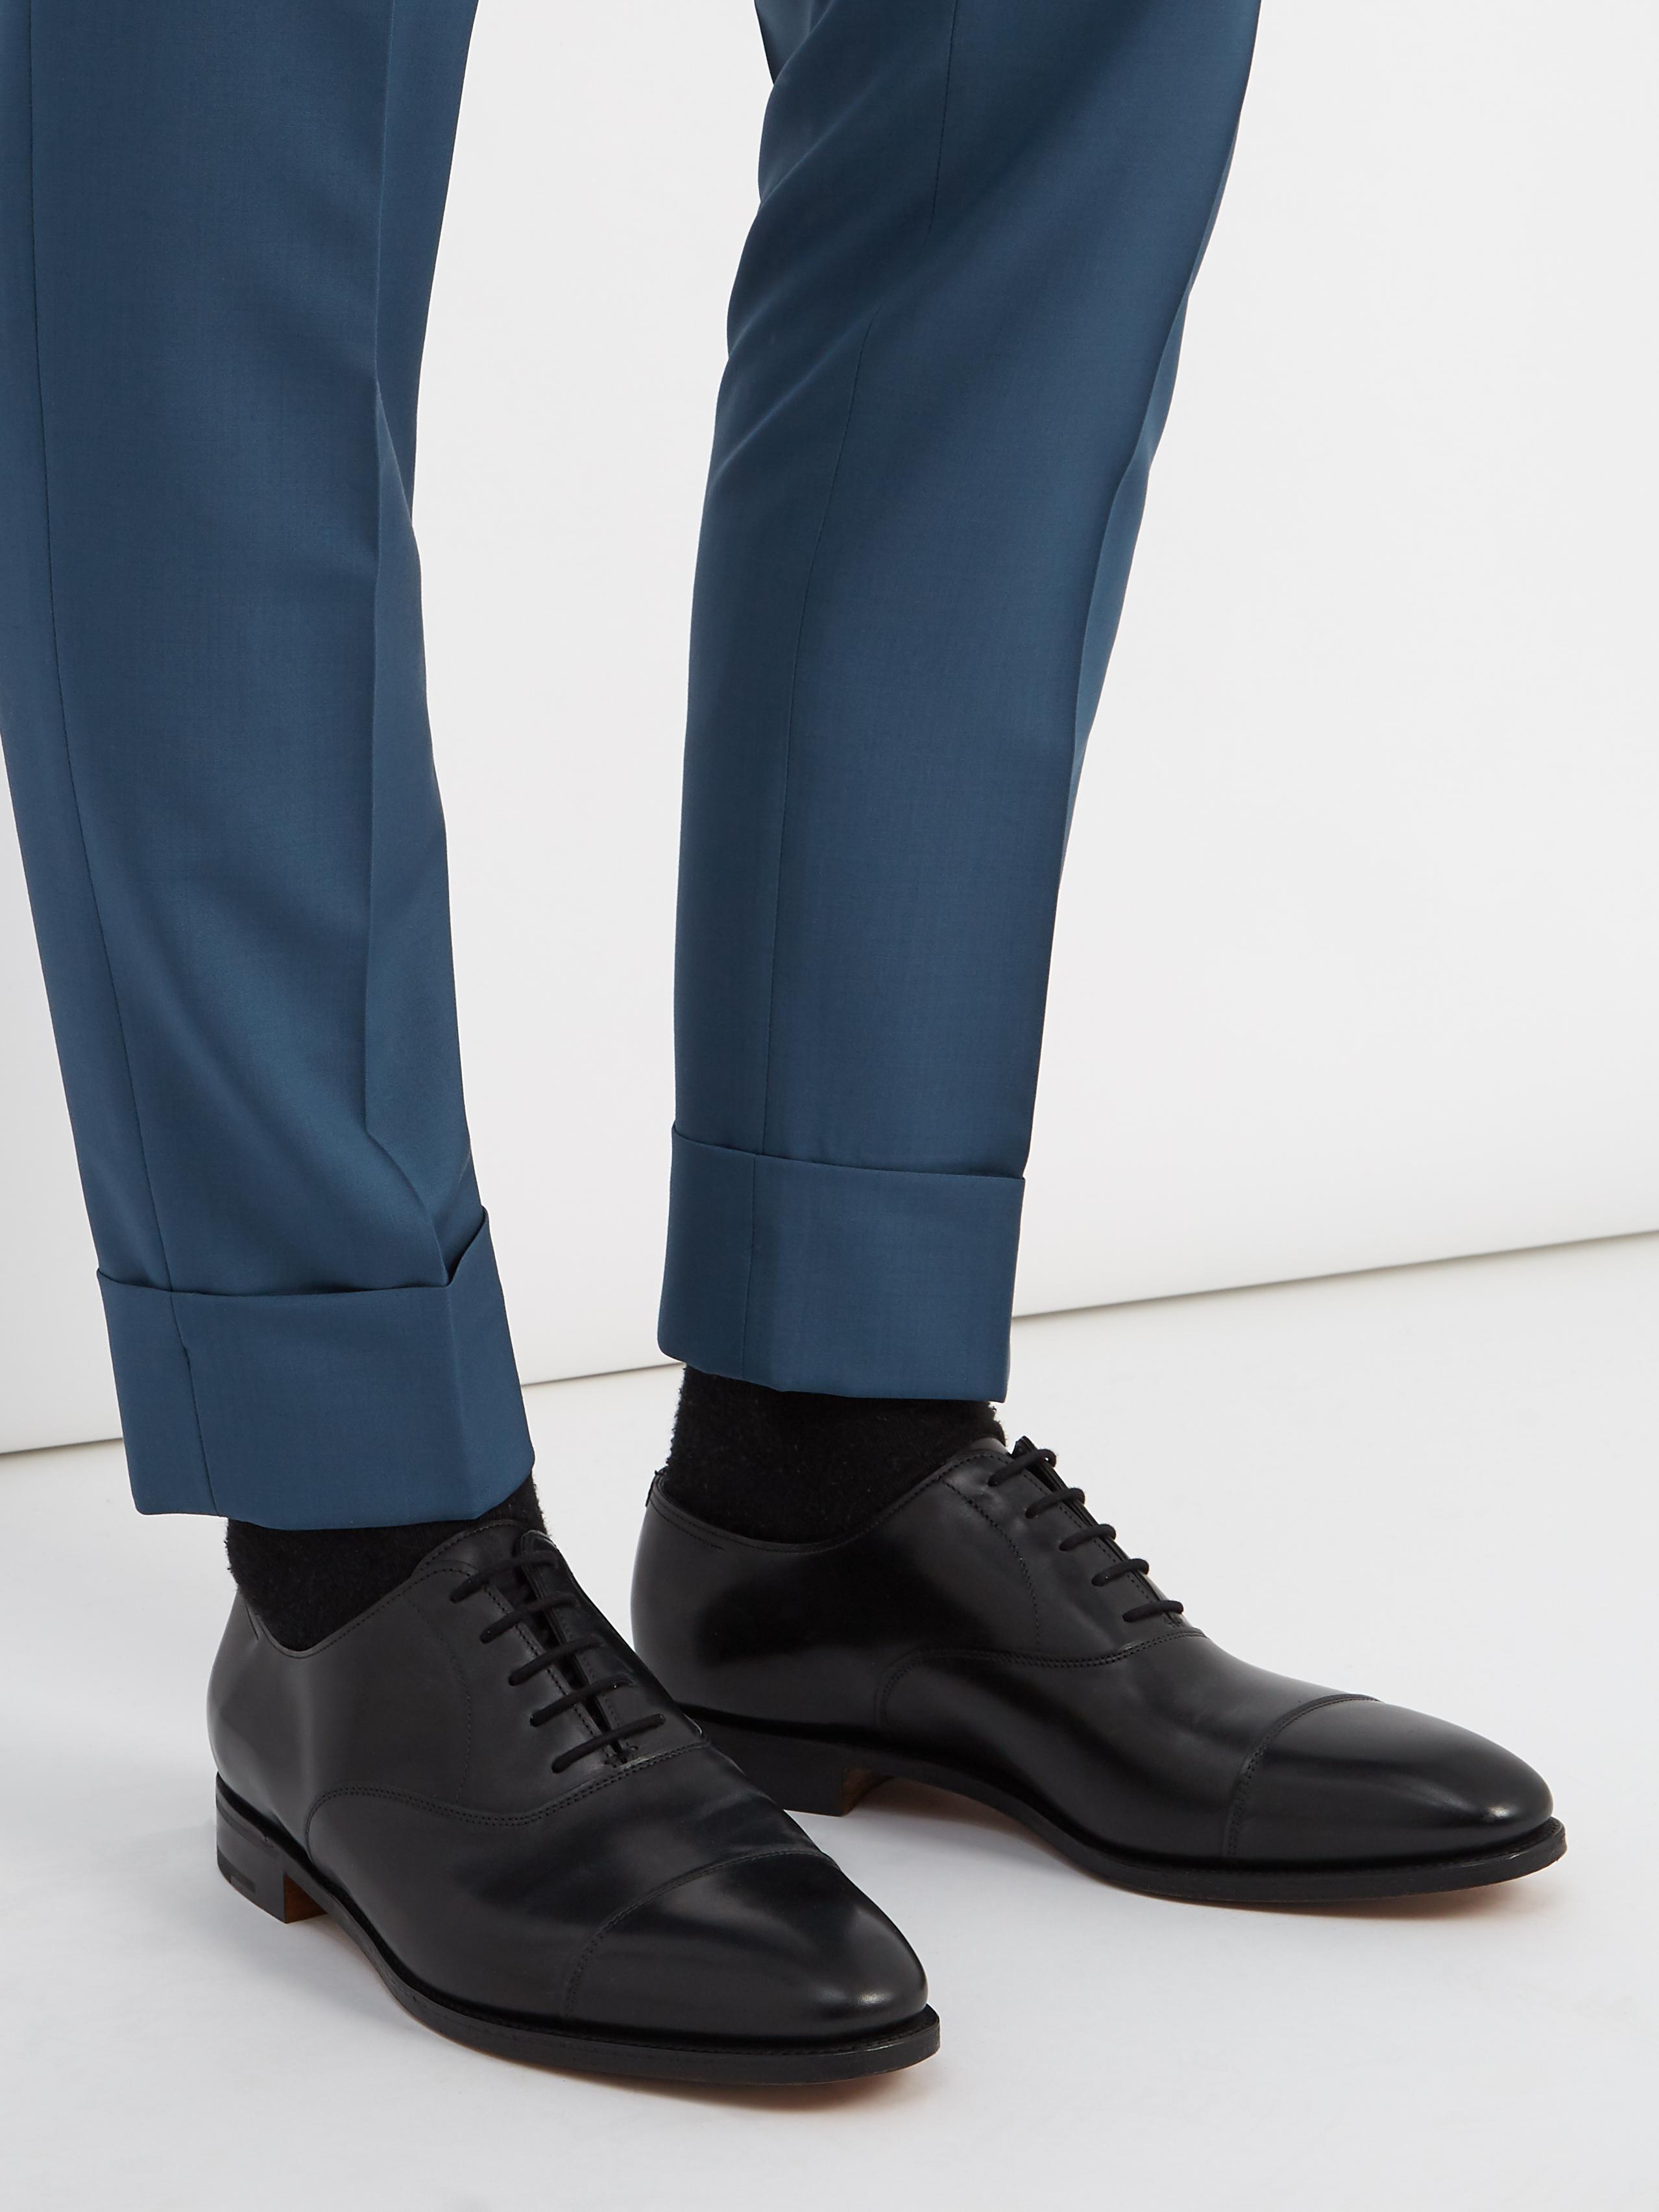 John Lobb City Ii Leather Oxford Shoes in Black for Men - Lyst